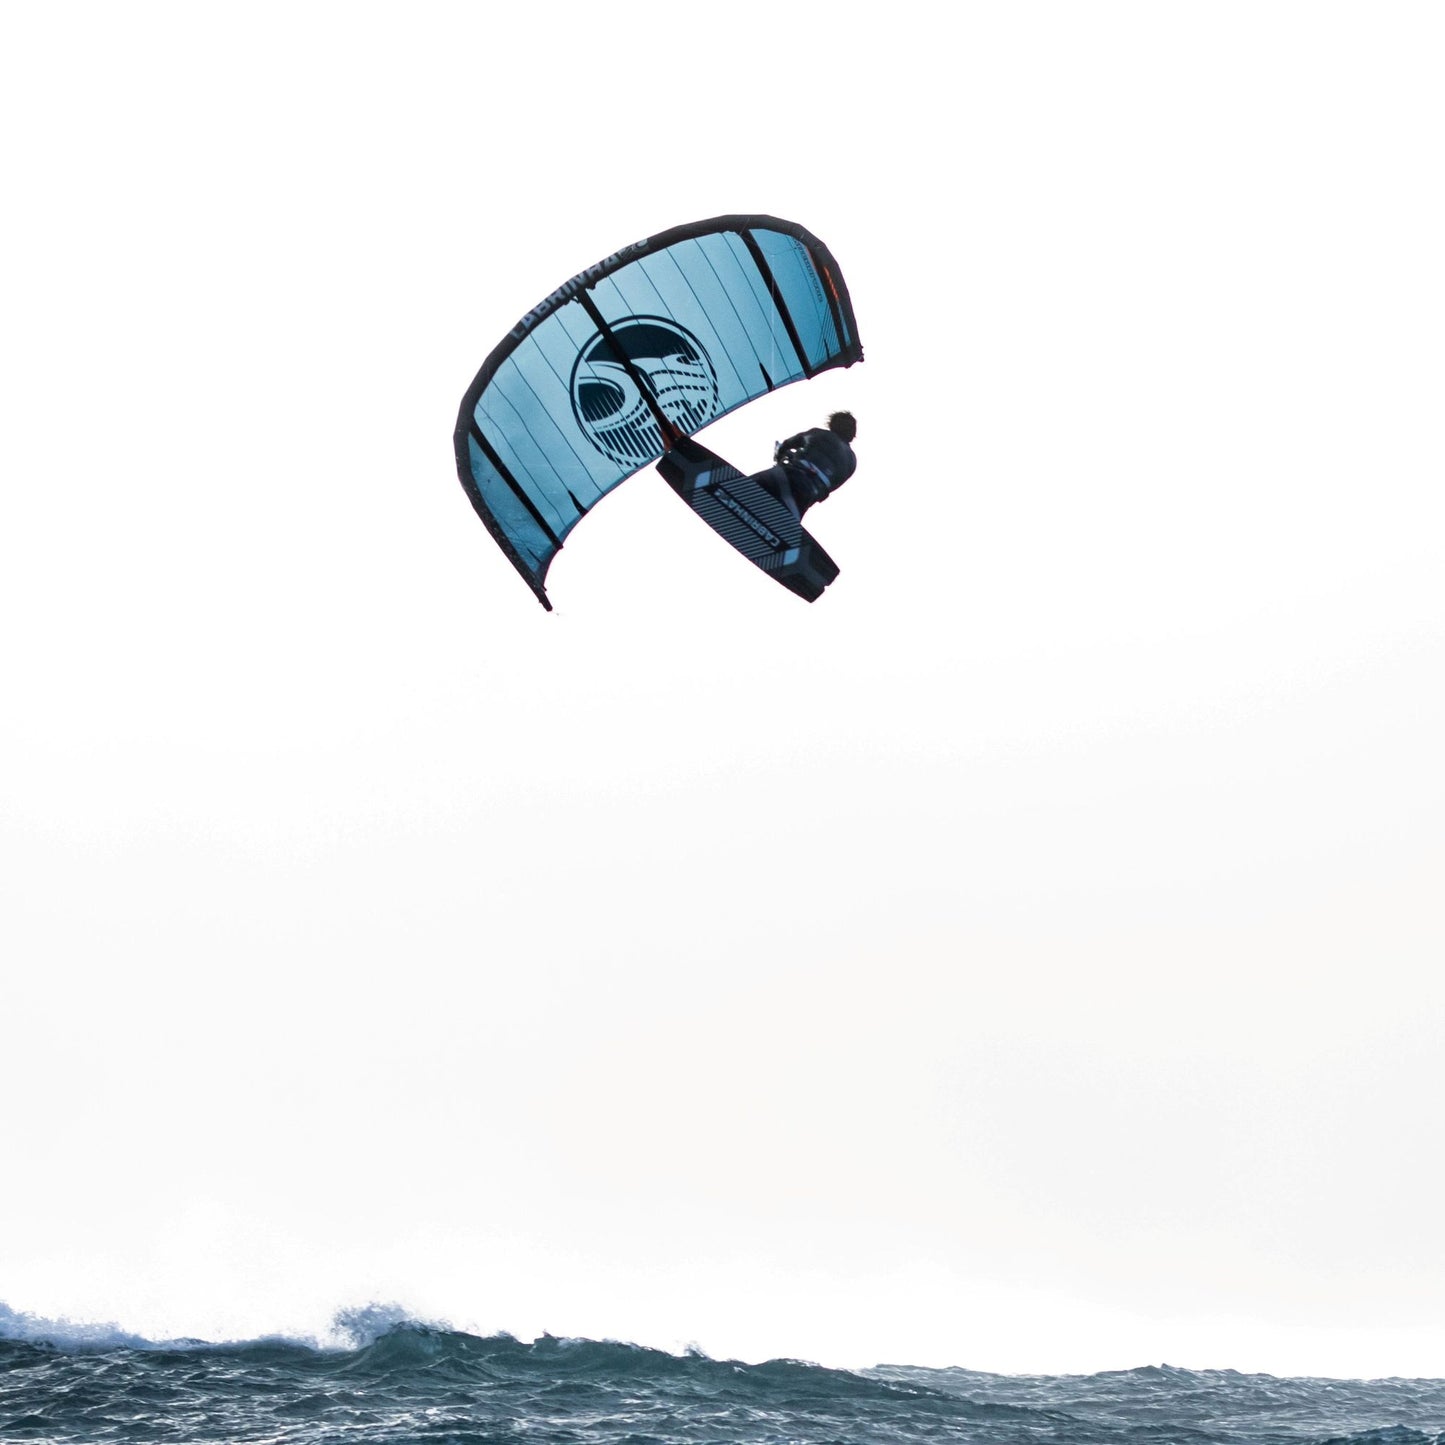 2020 Cabrinha Switchblade Performance Freeride / Big Air Kite